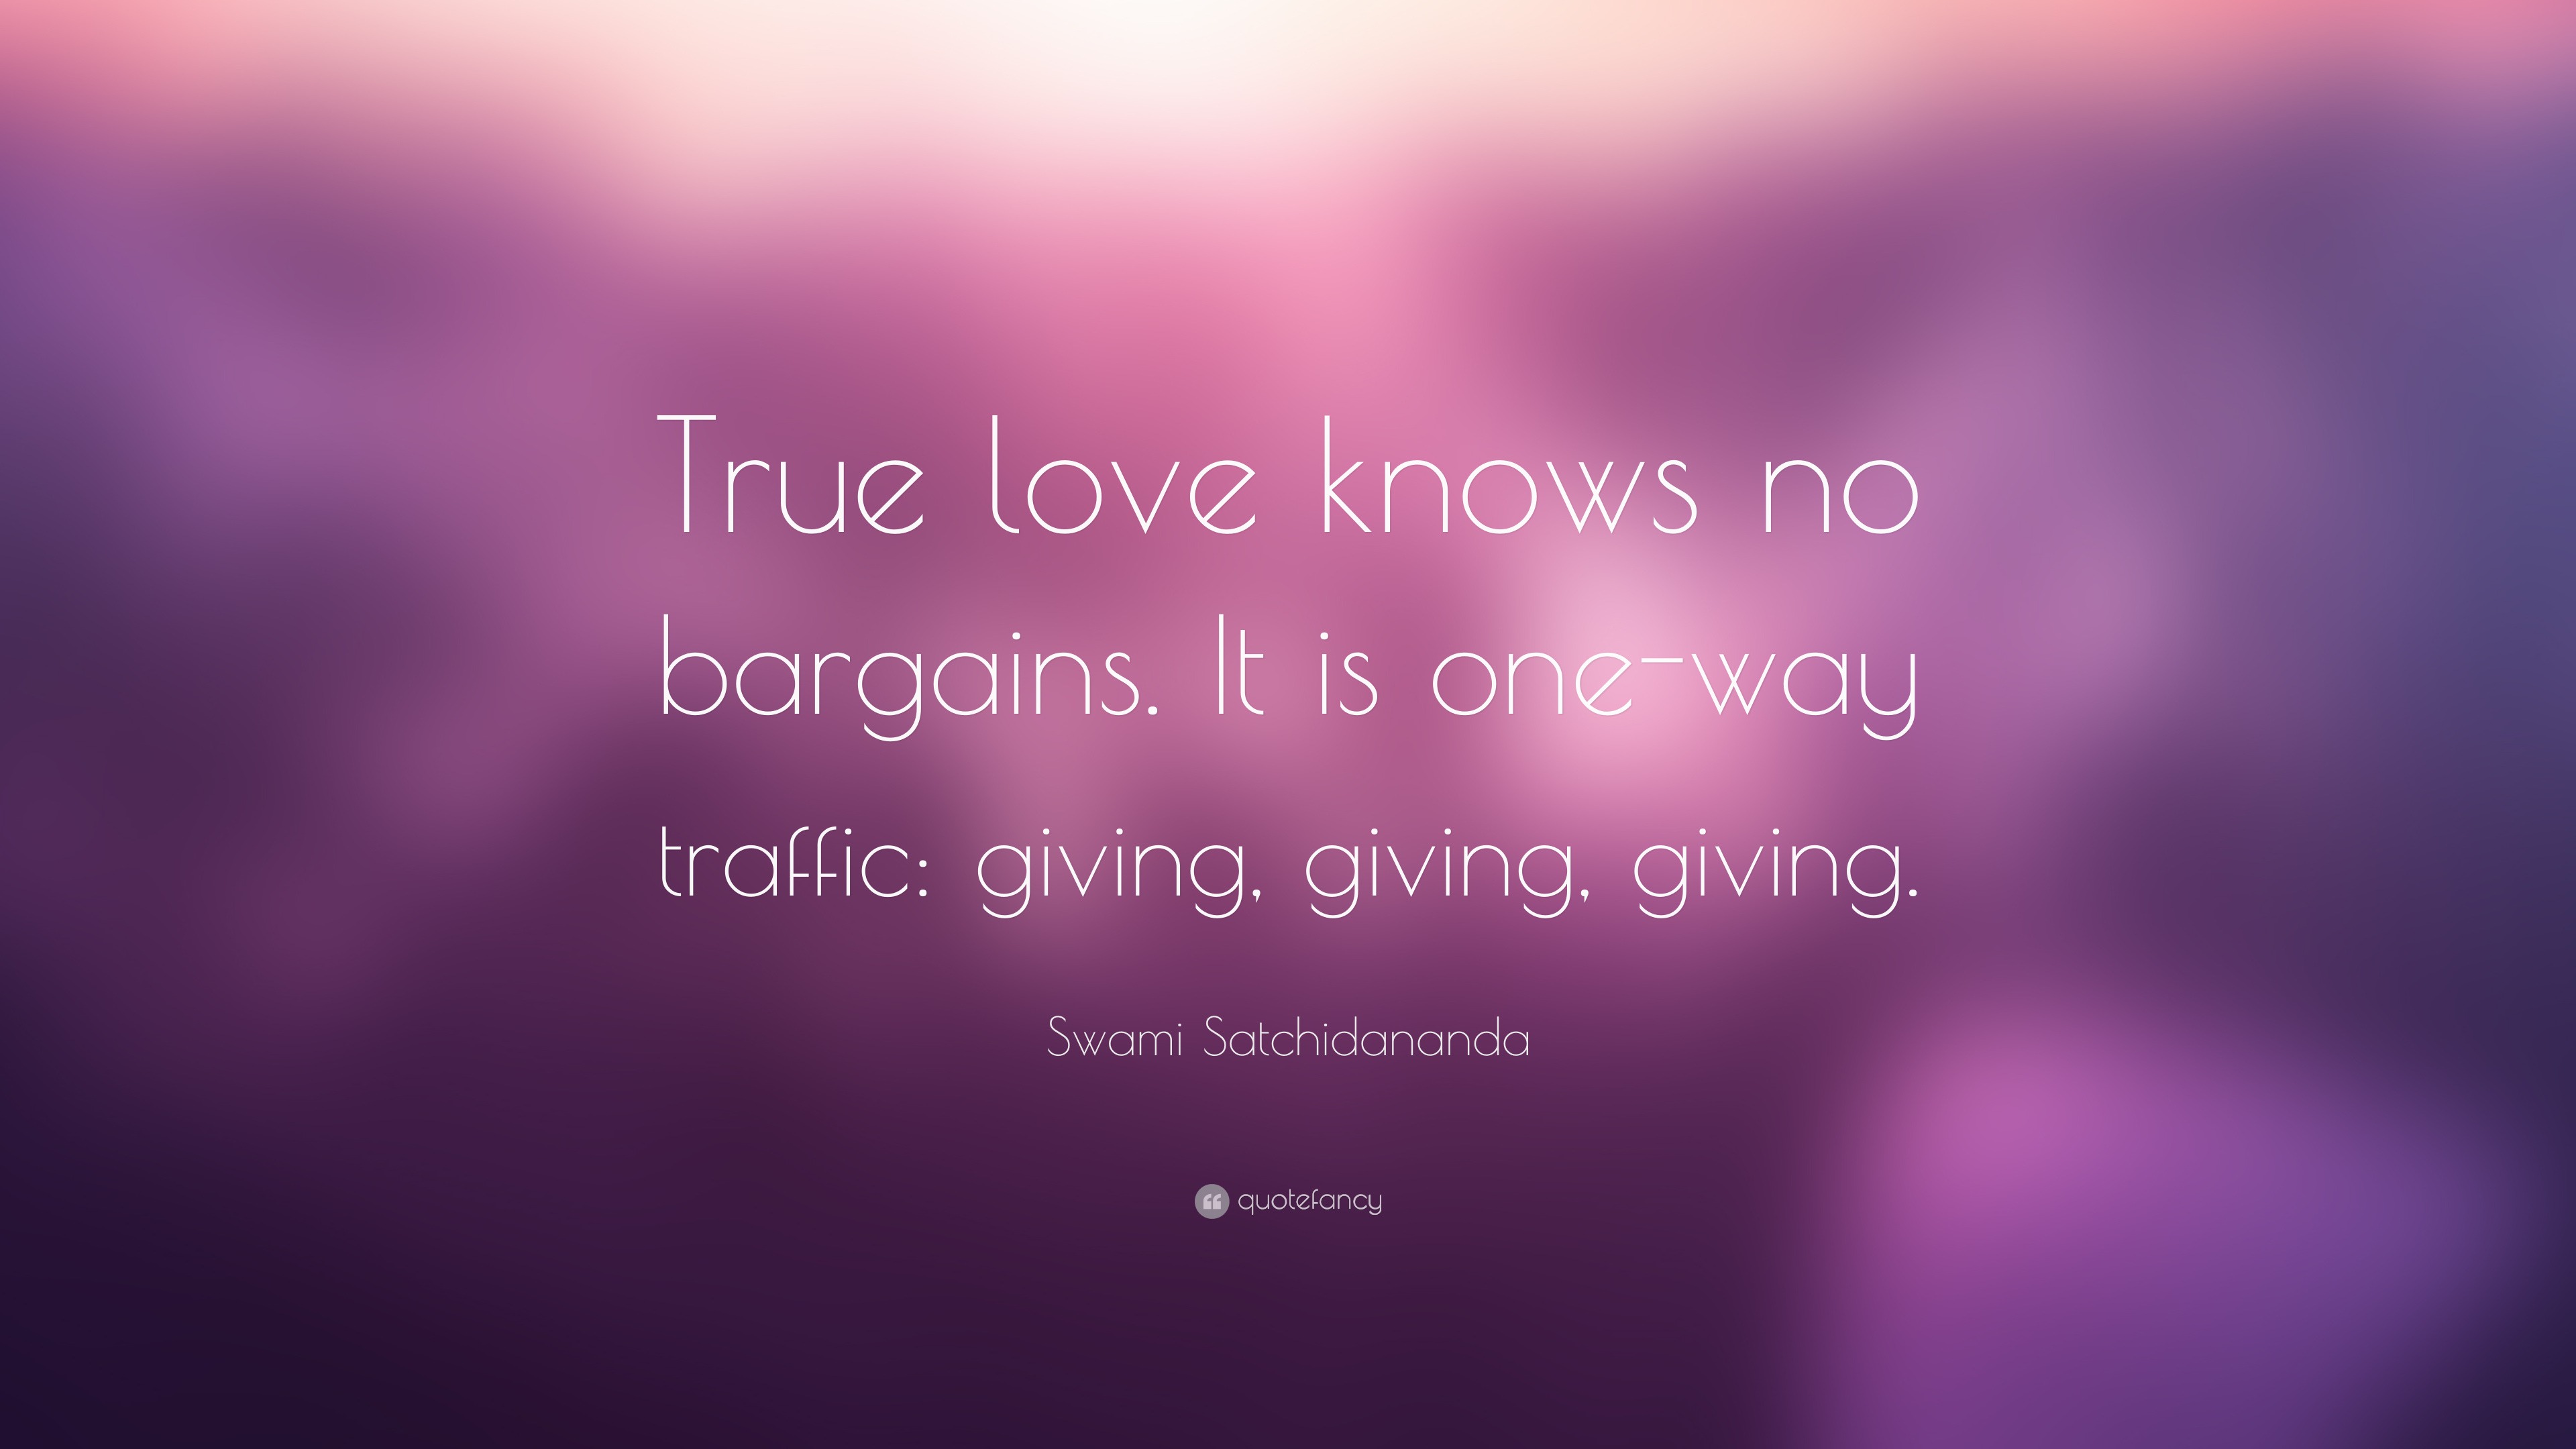 Swami Satchidananda Quote “True love knows no bargains It is one way